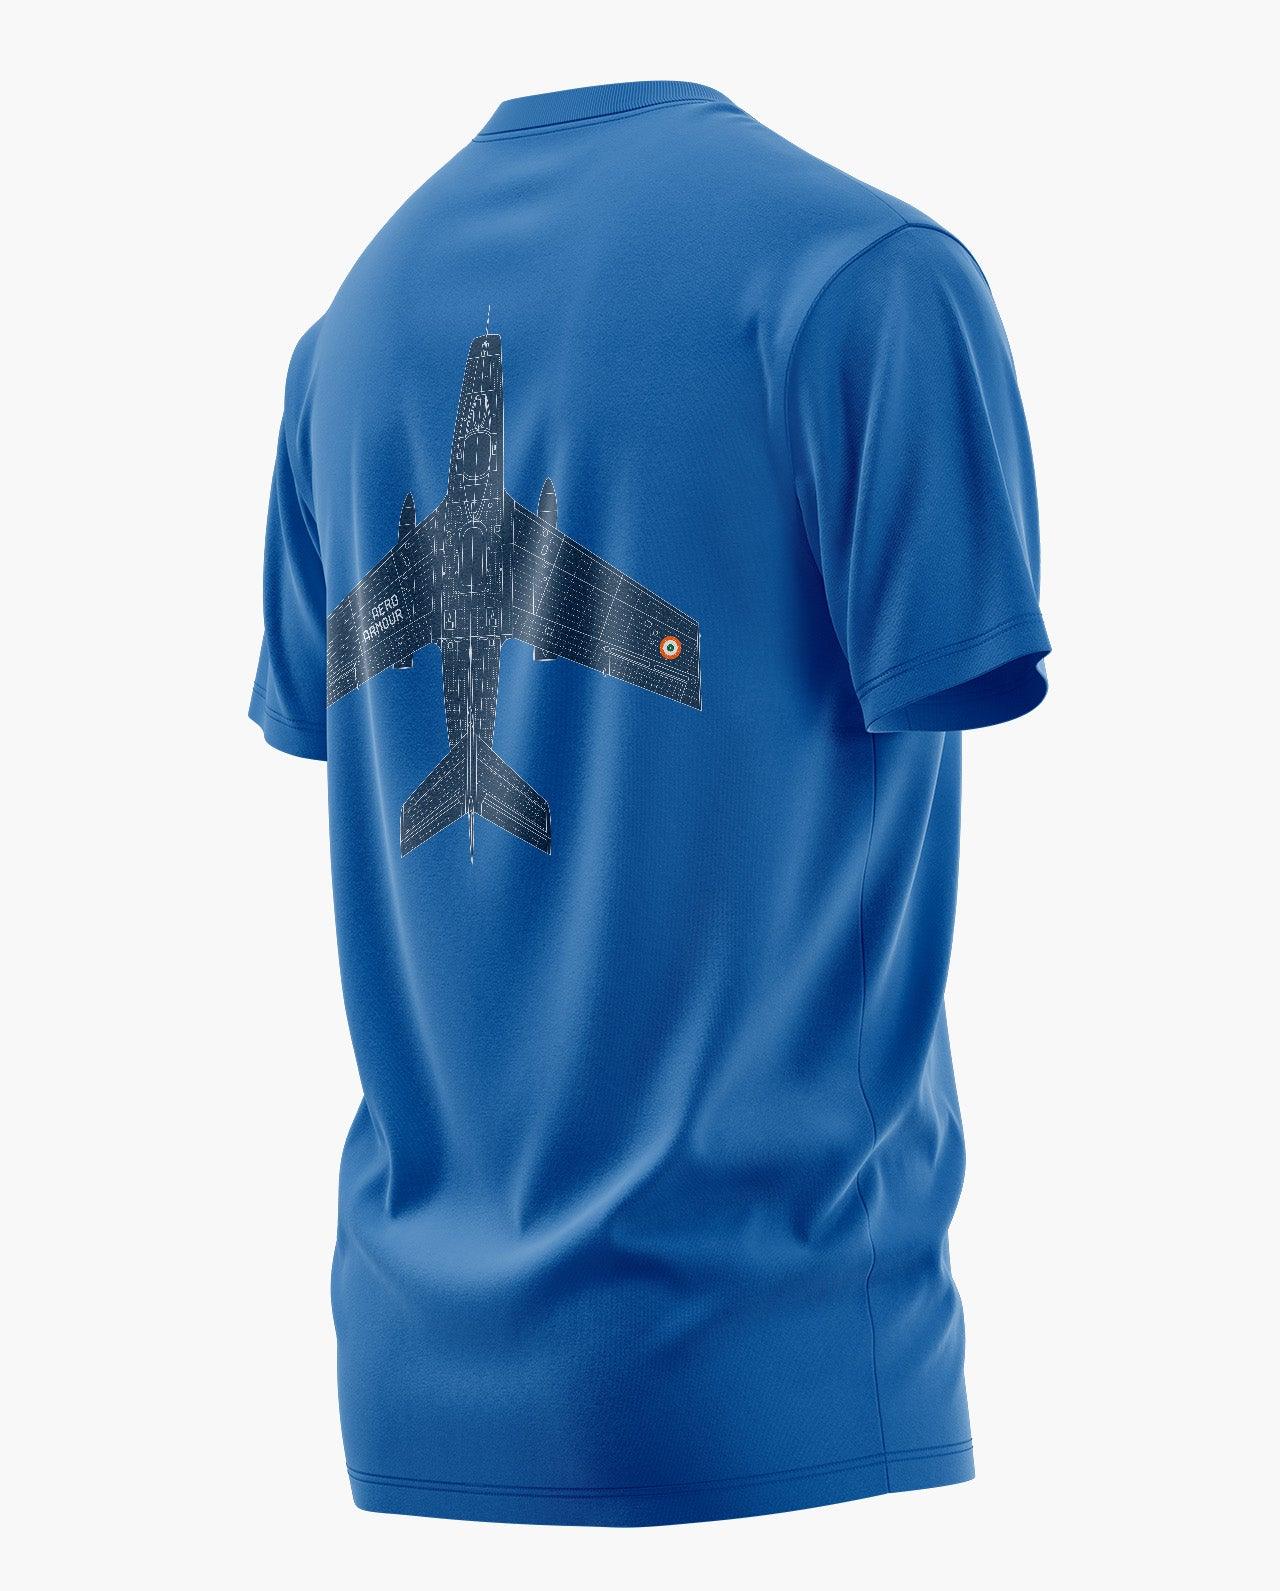 Mystere T-Shirt - Aero Armour